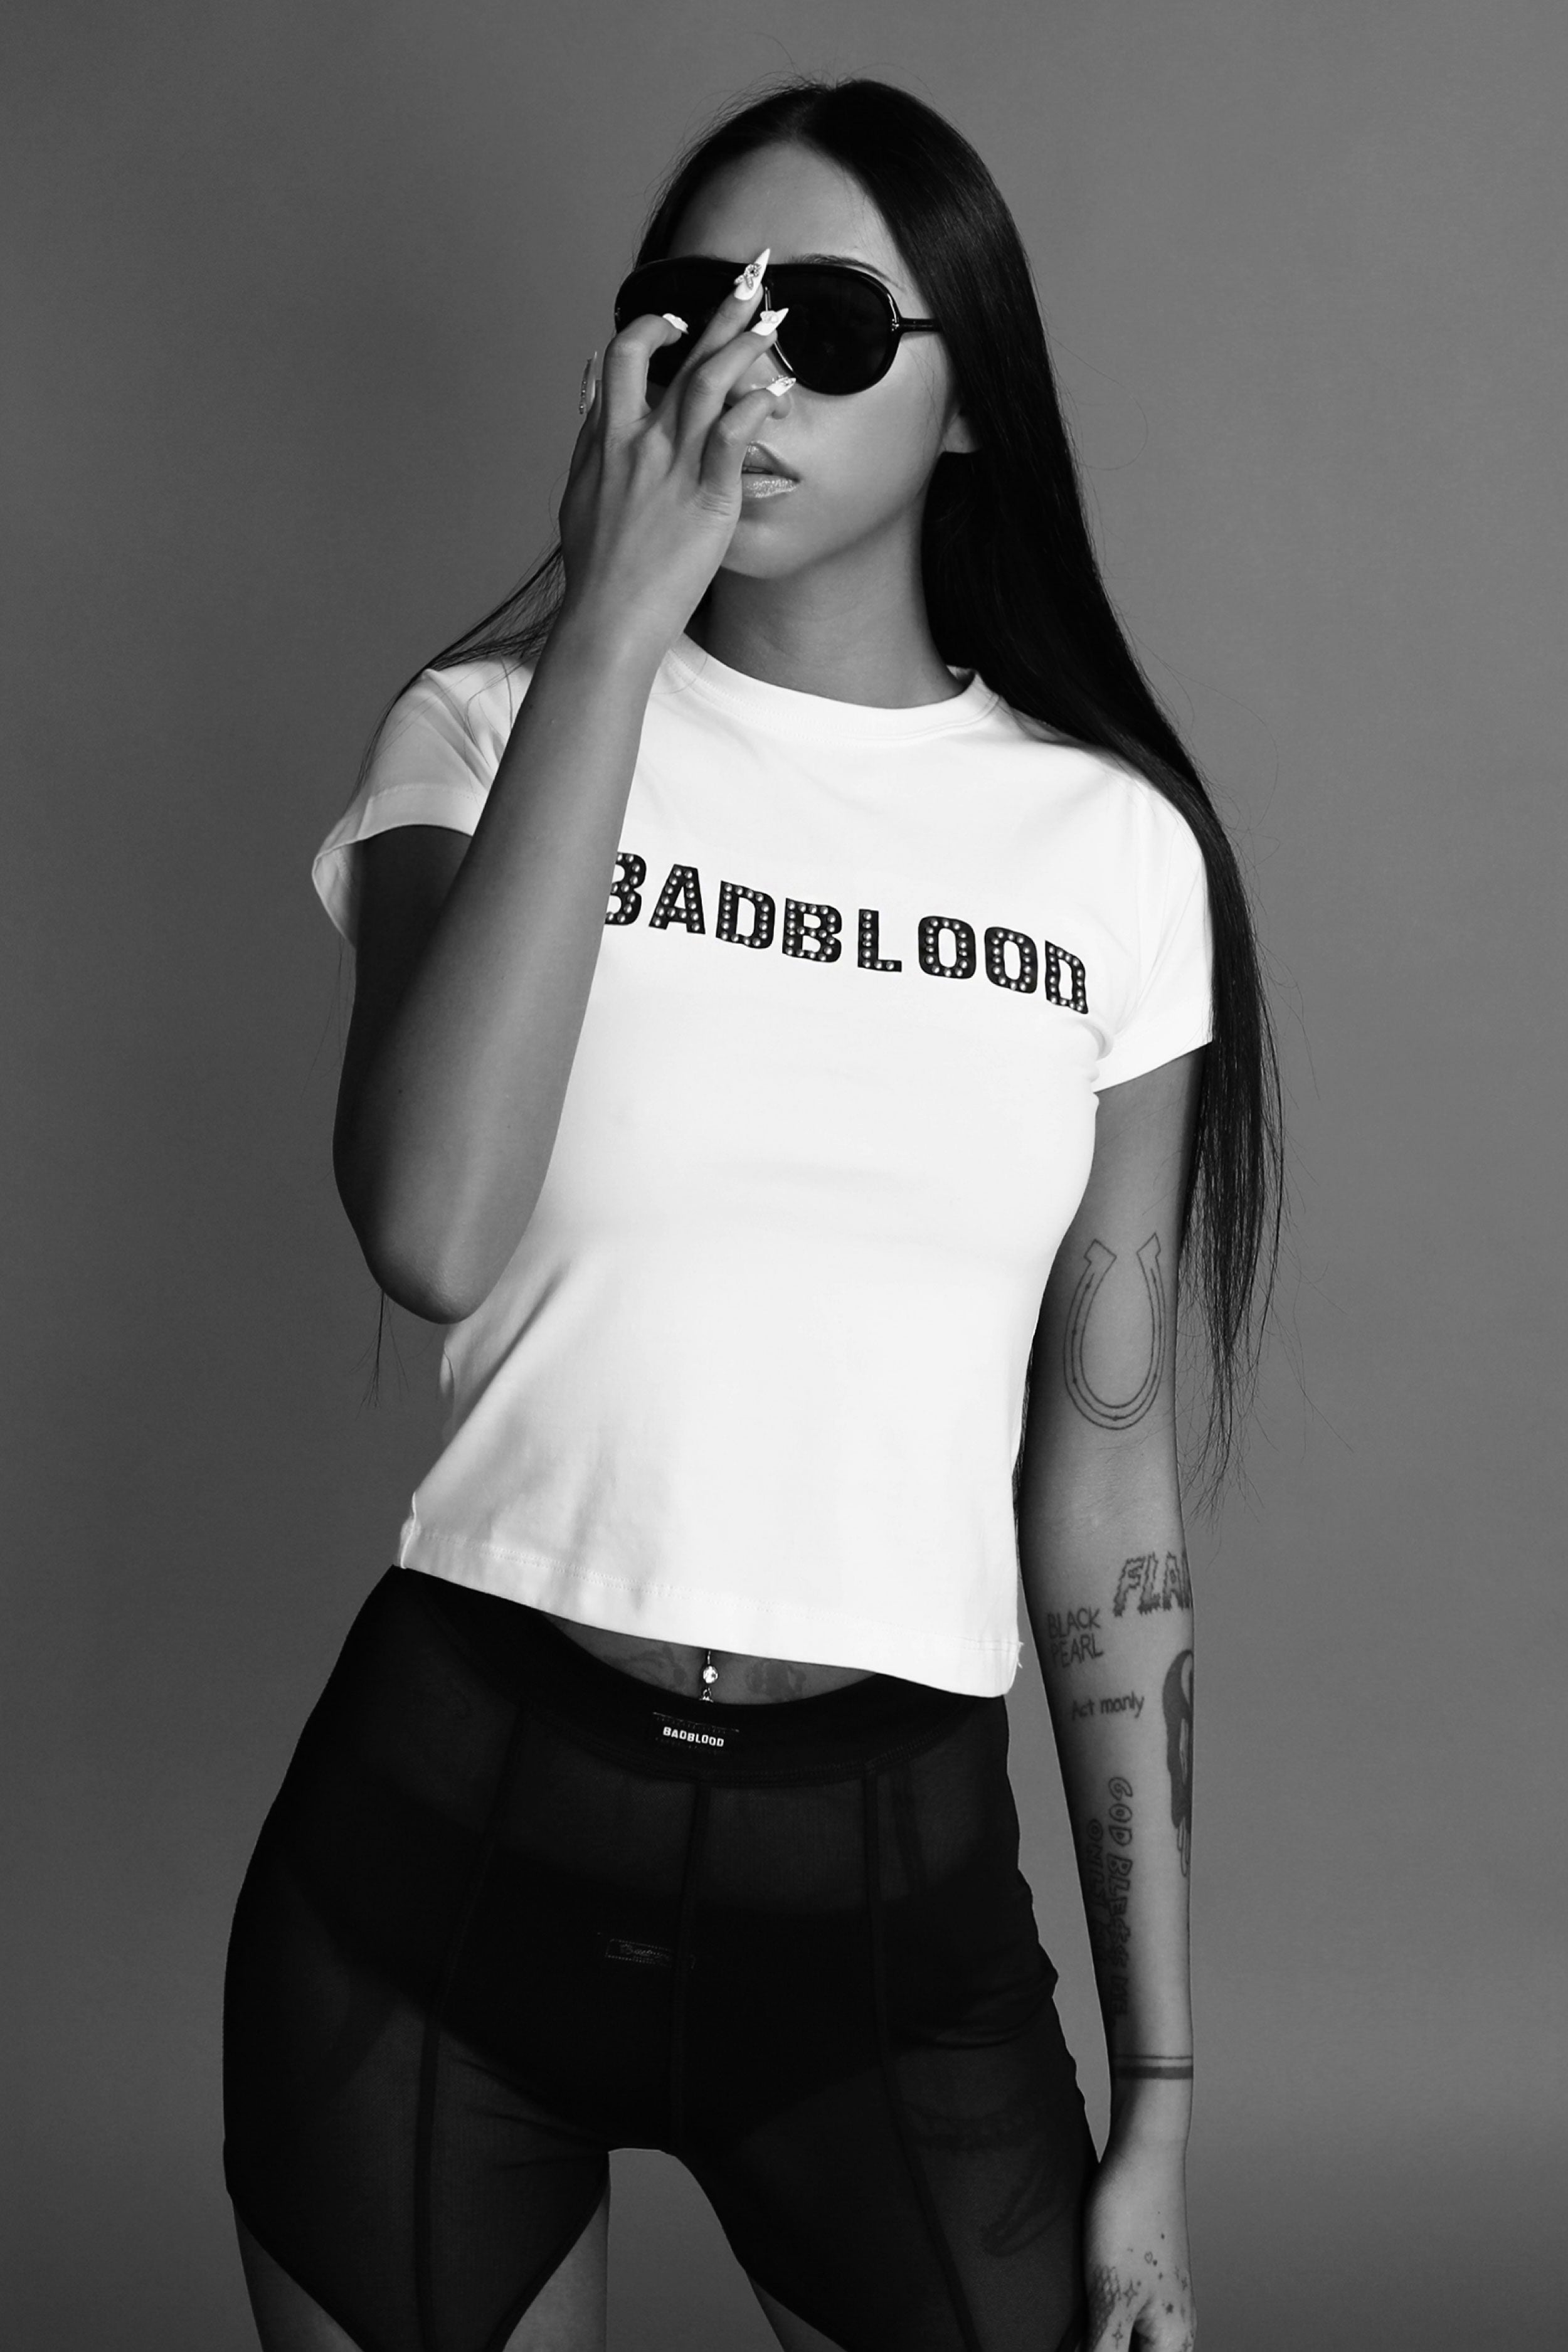 Badblood 鉚釘標誌短袖修身白色